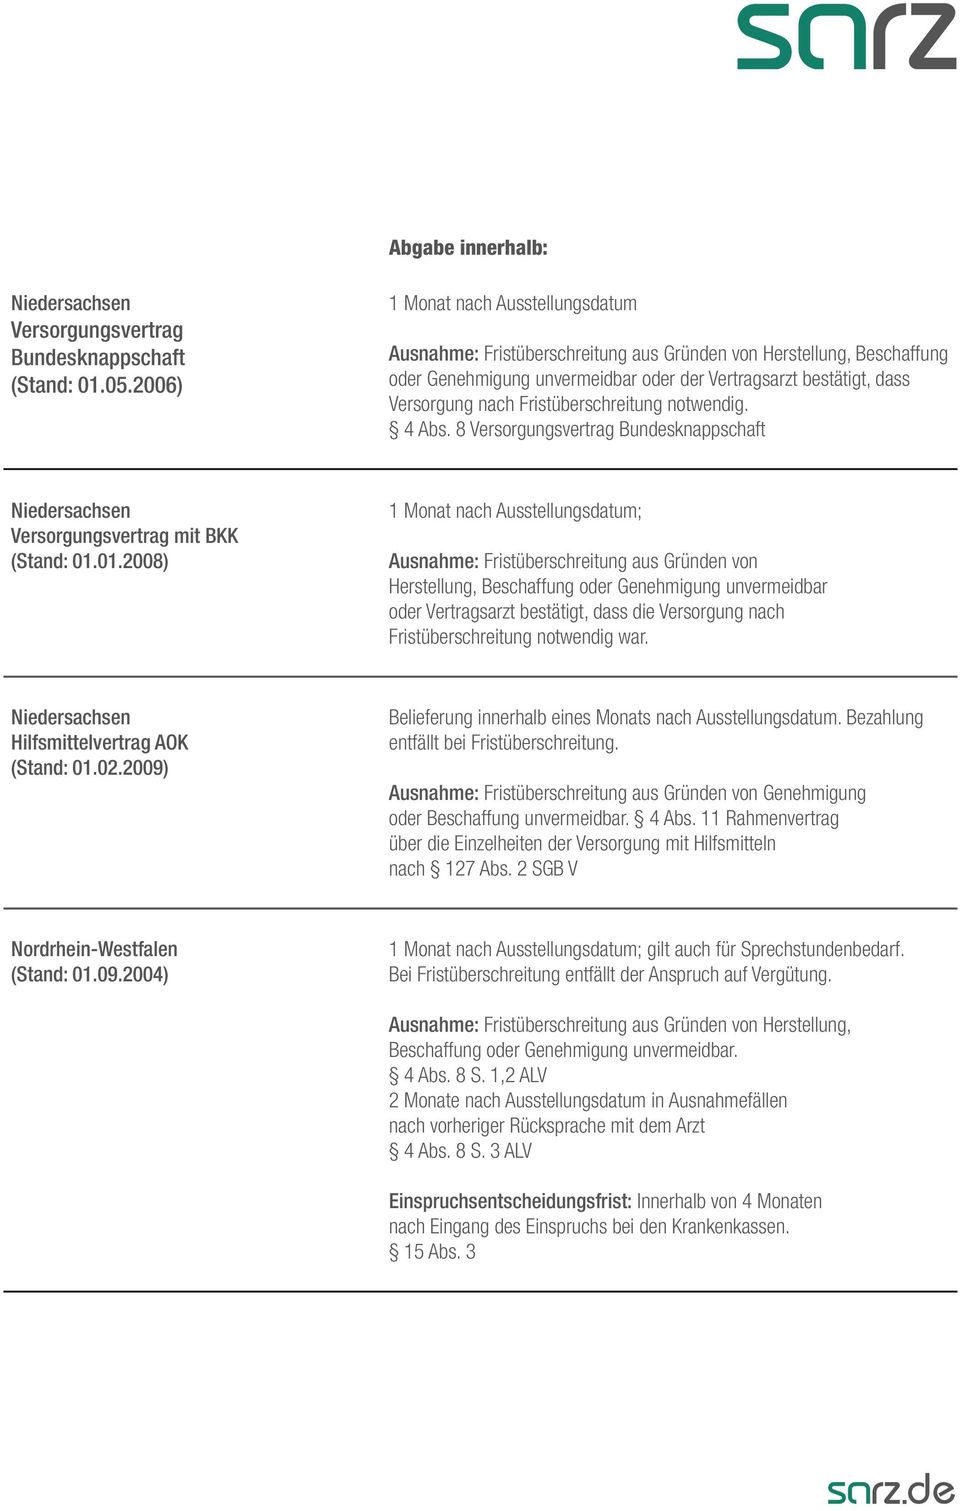 8 Versorgungsvertrag Bundesknappschaft Niedersachsen Versorgungsvertrag mit BKK (Stand: 01.01.2008) ; Niedersachsen Hilfsmittelvertrag AOK (Stand: 01.02.